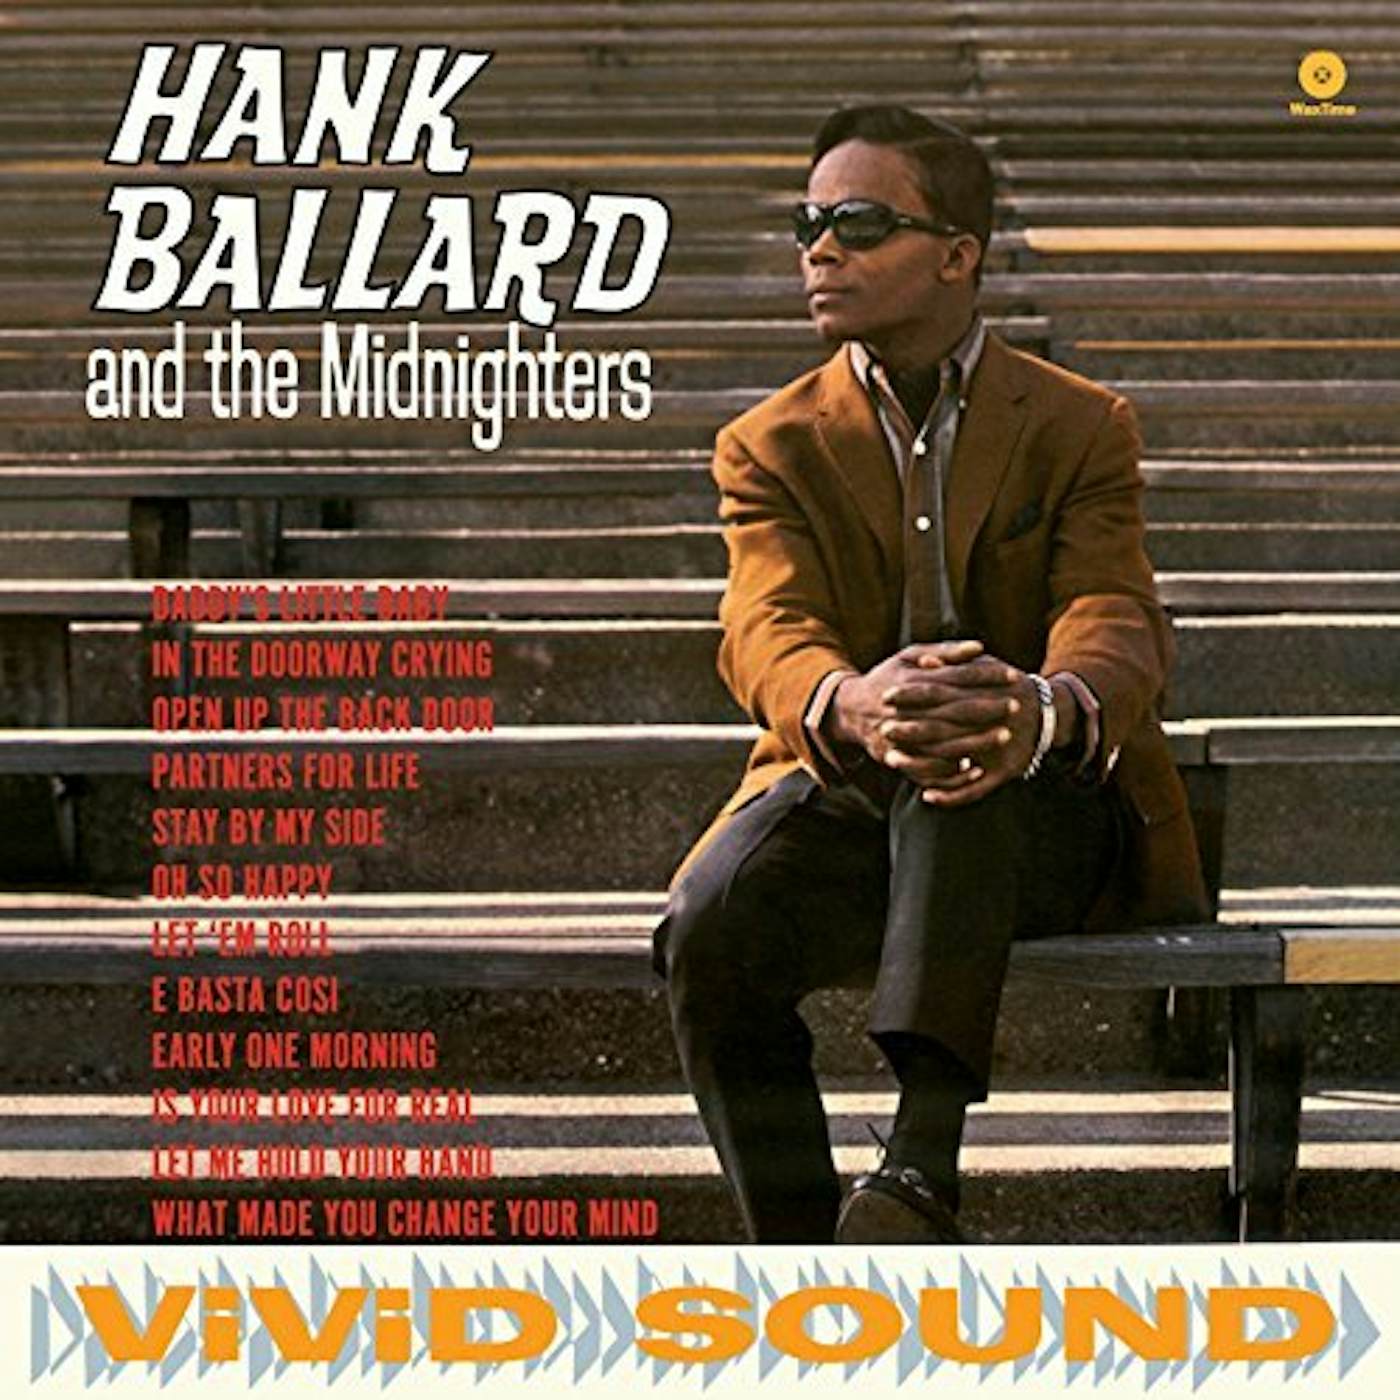 HANK BALLARD & THE MIDNIGHTERS Vinyl Record - UK Release